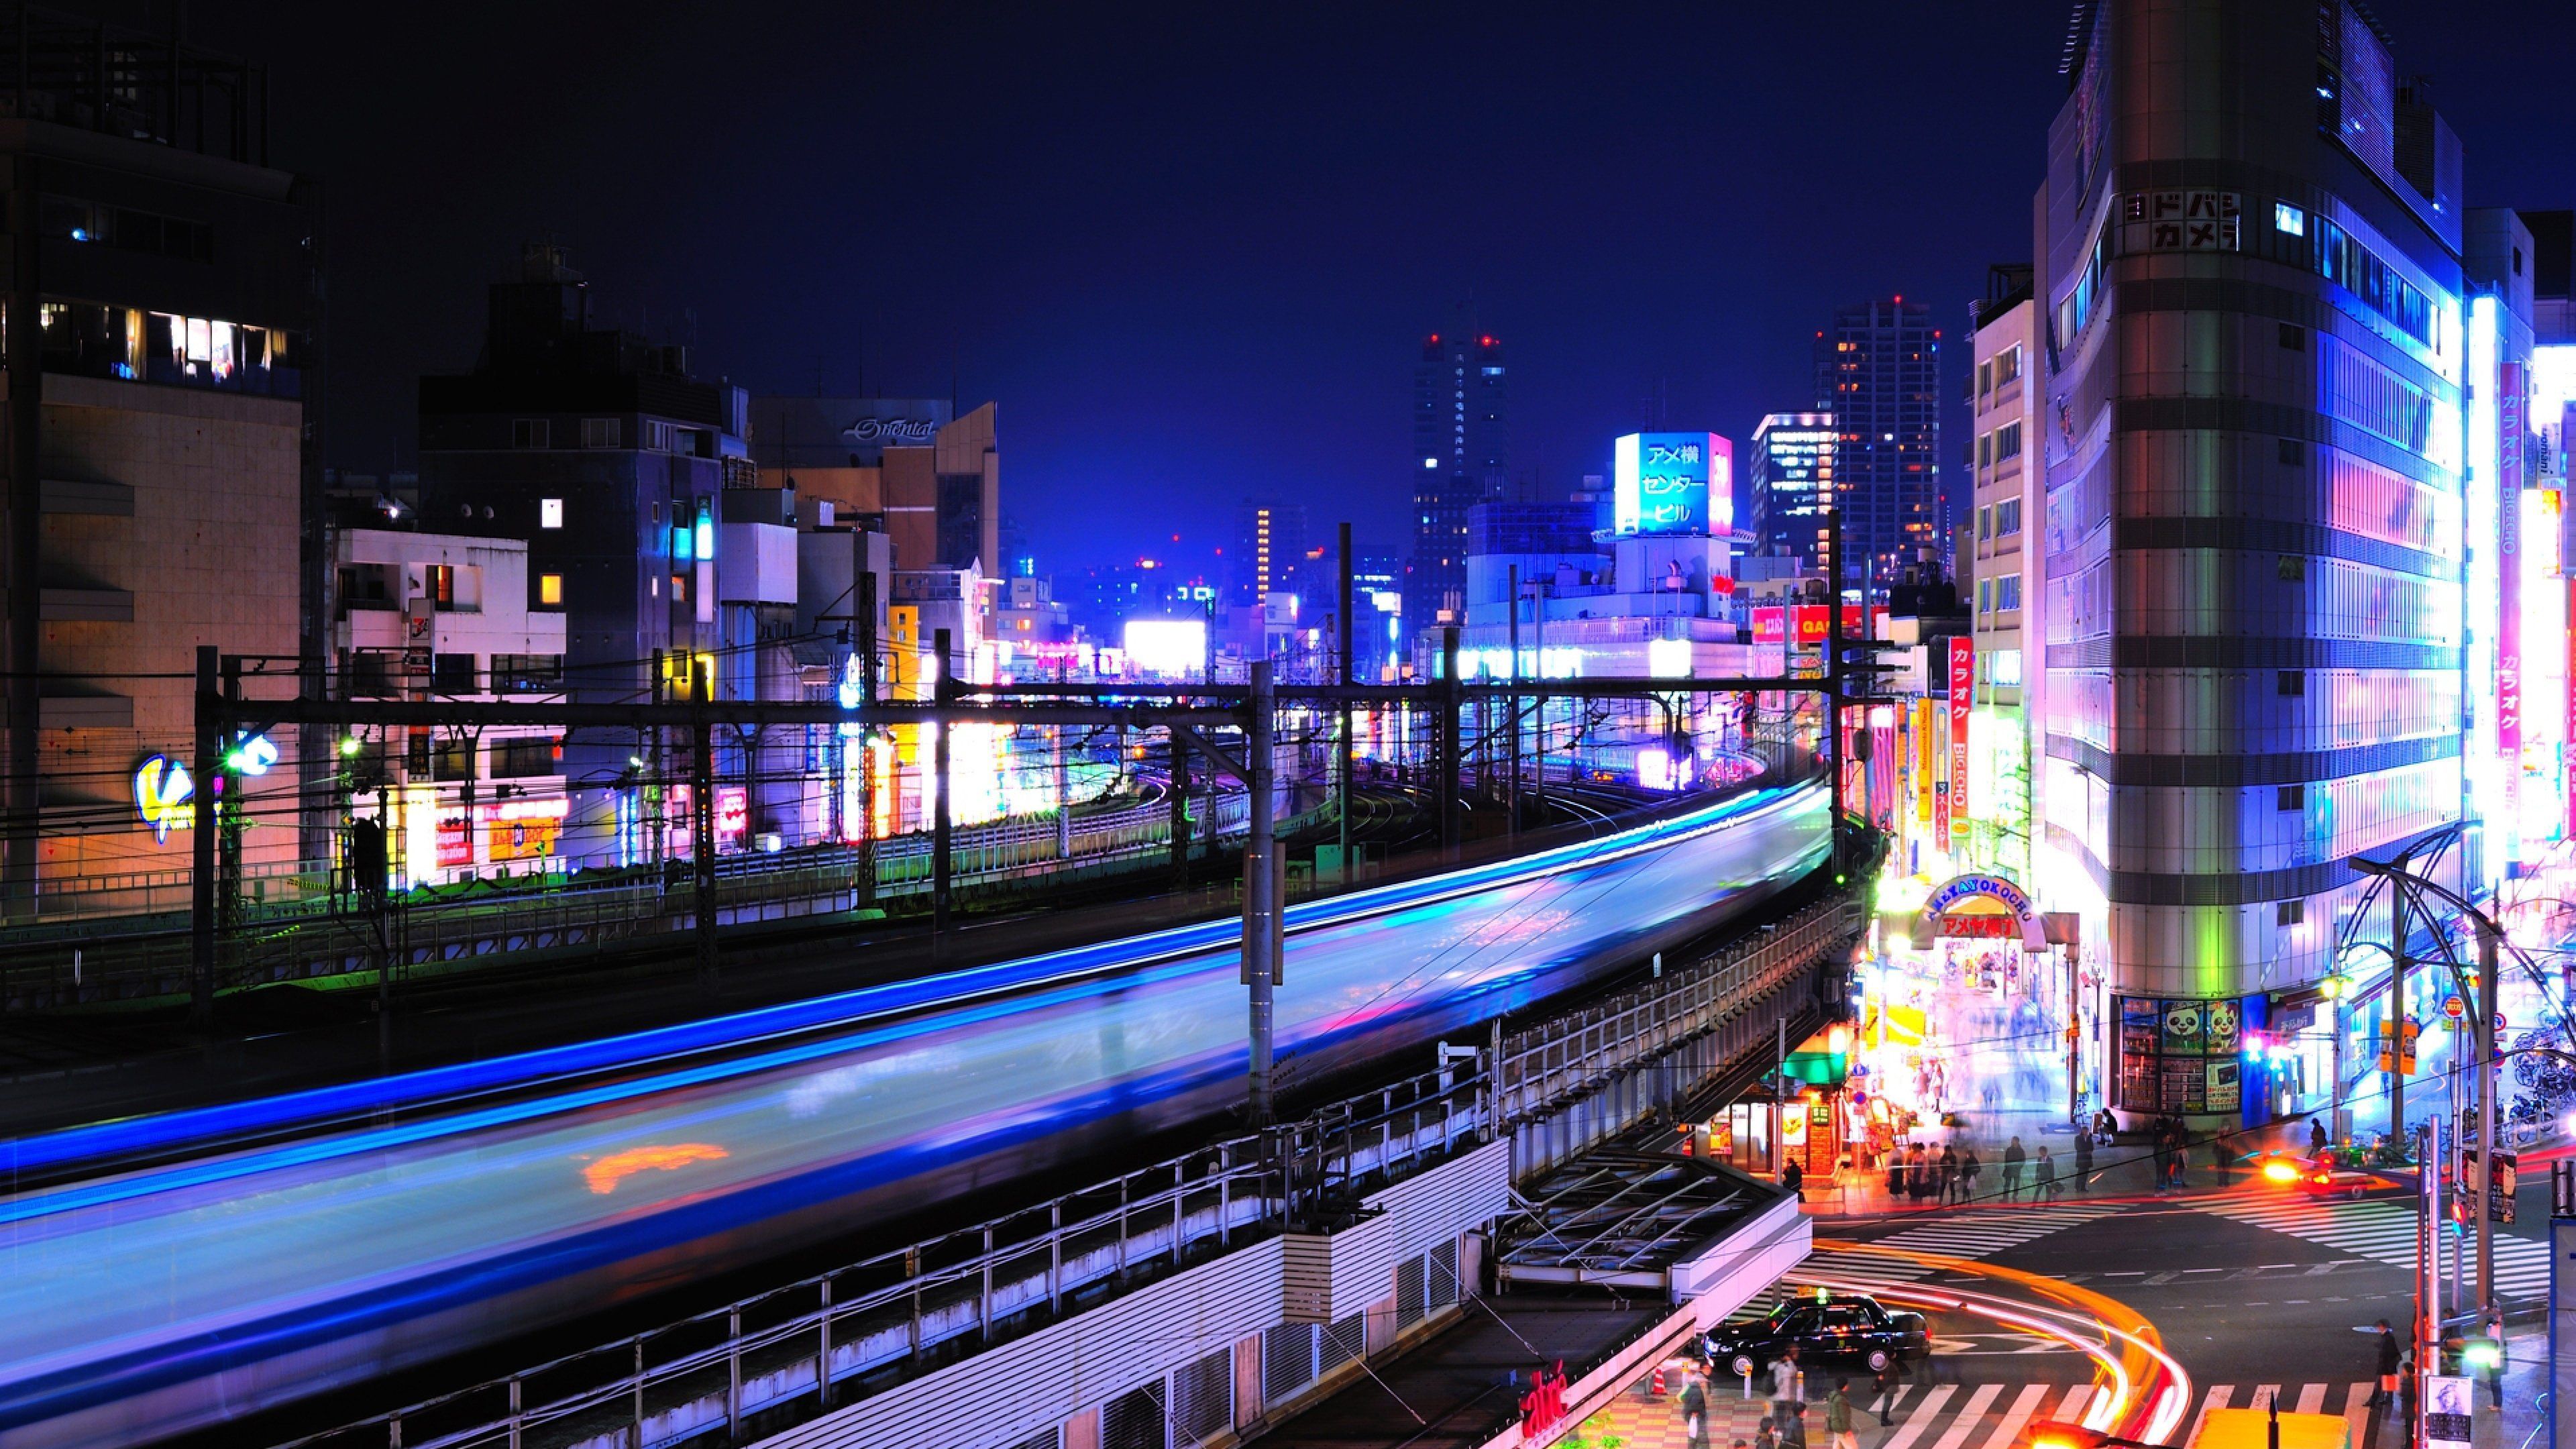 A train passing through a city at night. - Tokyo